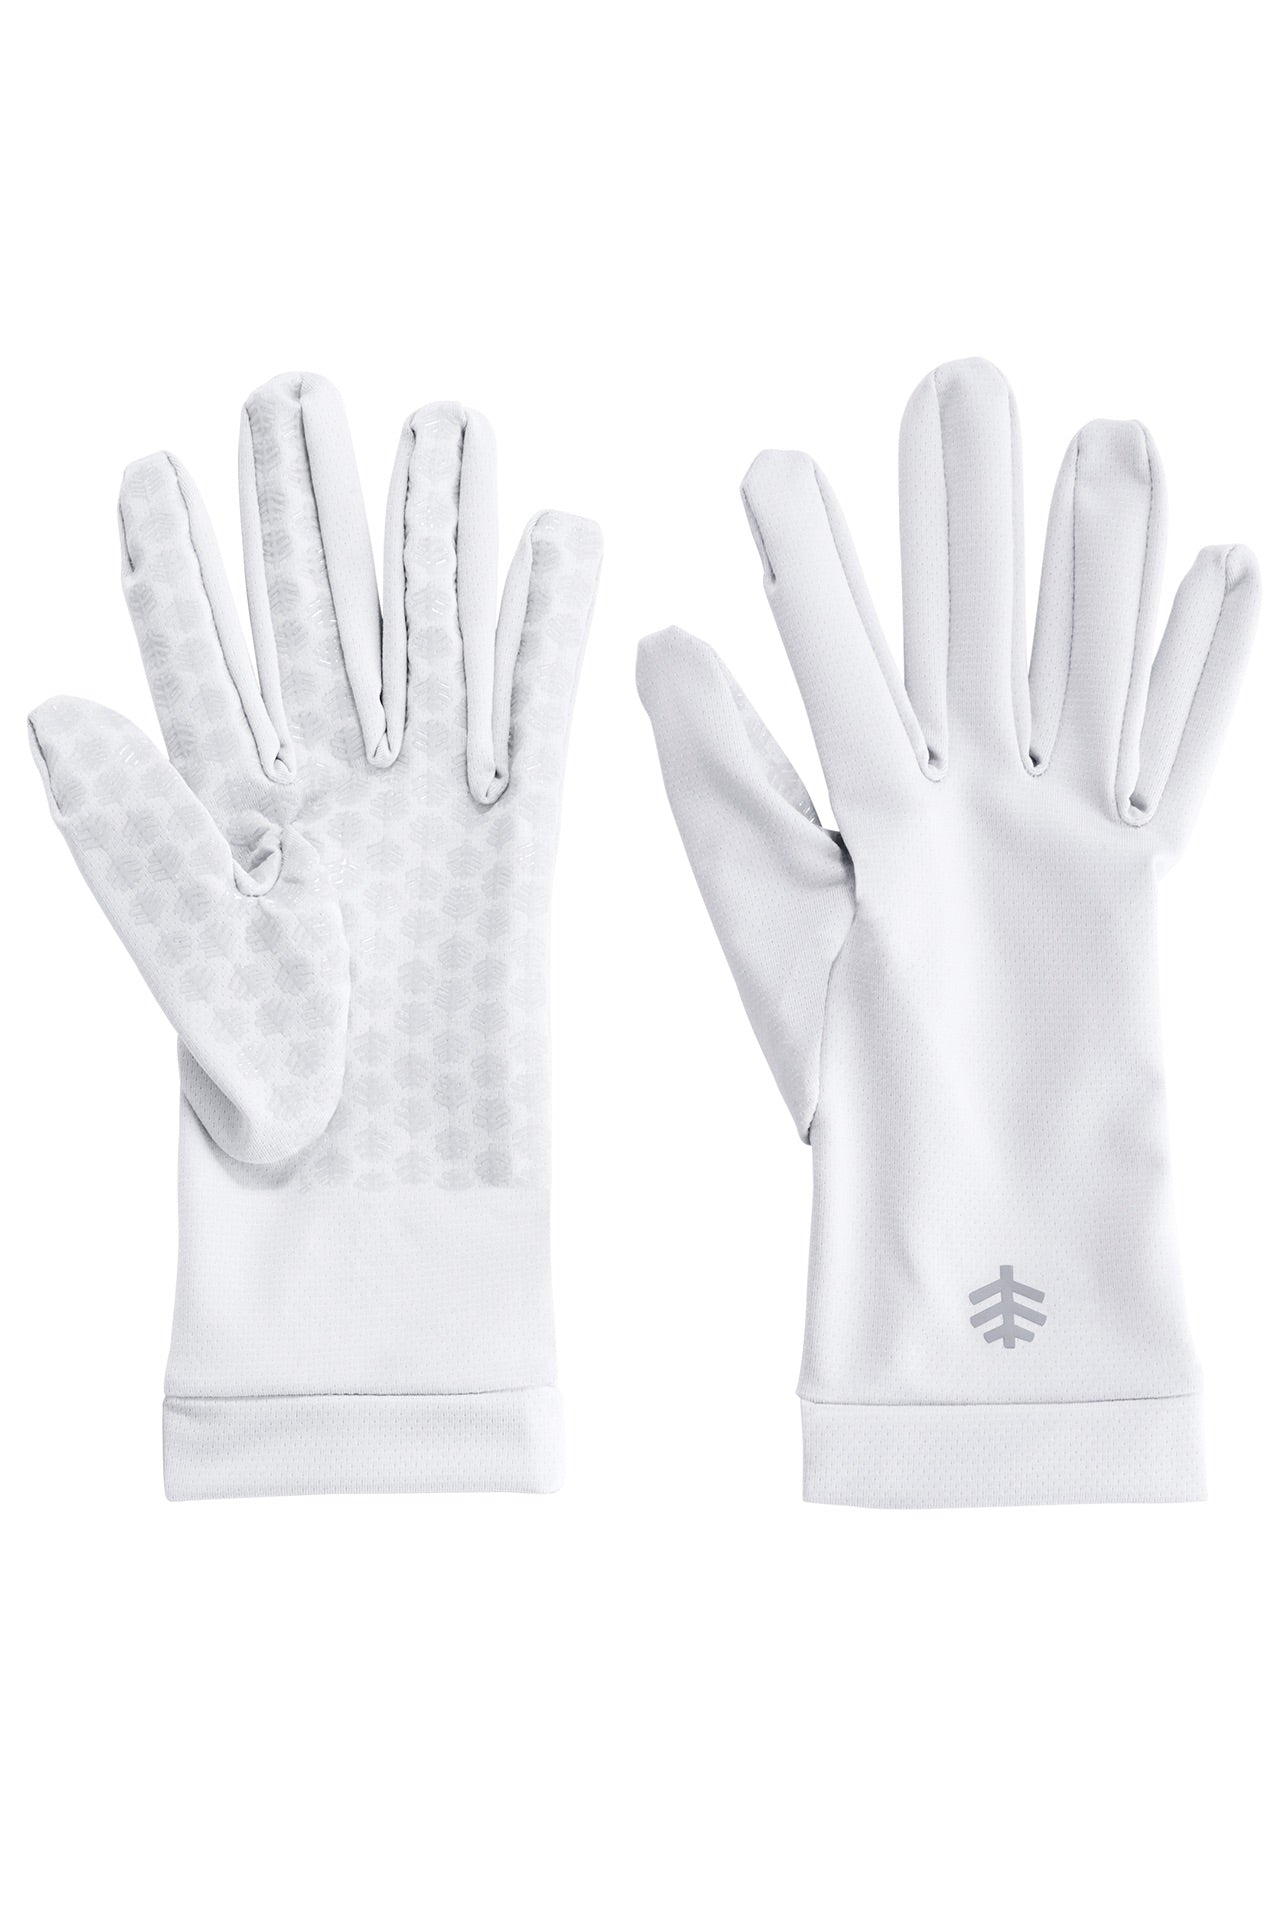 Coolibar Sun Protective unisex Sawyer UV Sun Gloves | White | Large